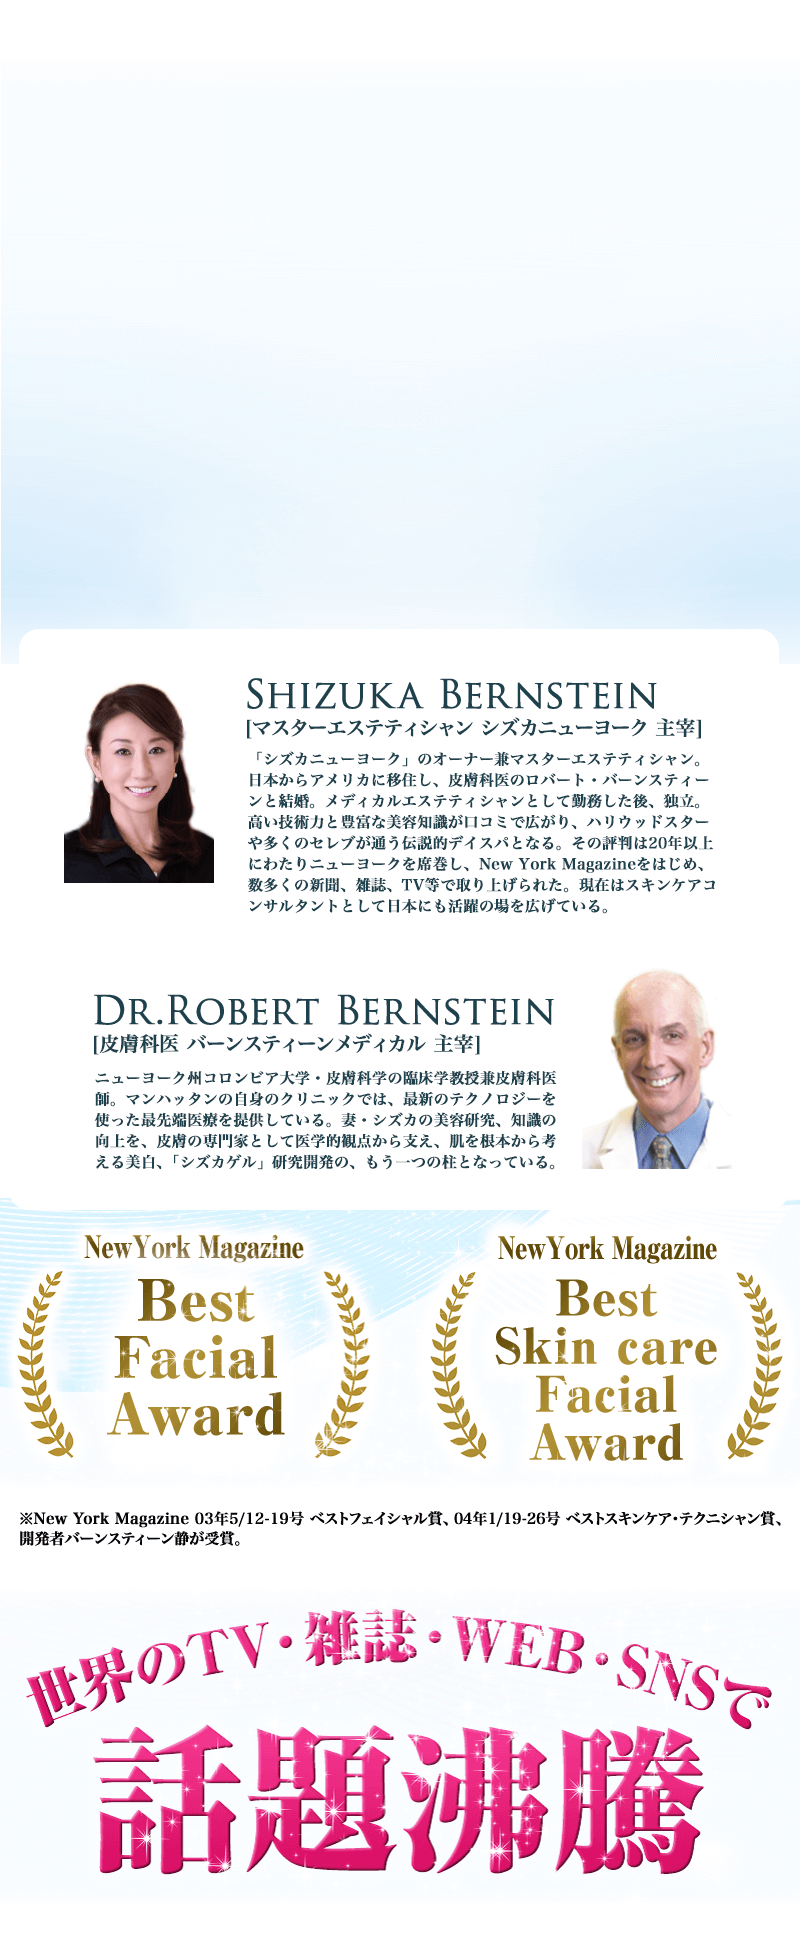 　Shizuka Bernstein[マスターエステティシャン シズカニューヨーク主宰]：日本からアメリカに移住し、皮膚科医のロバート・バーンスティーンと結婚。1995年から20年以上ニューヨークでエステティシャンとして活躍する彼女の技術に富んだテクニックと豊富な美容知識は、多くの海外セレブを魅了している。　Dr. Robert Bernstein[皮膚科医  バーンスティーンメディカル主宰]：ニューヨーク州コロンビア大学・皮膚科学の臨床学教授兼皮膚科医師。マンハッタンにある自身のクリニックでは、最先端技術を駆使した治療を行っている。妻の美容知識の向上、研究を、医学的観点から支えている。（※5）